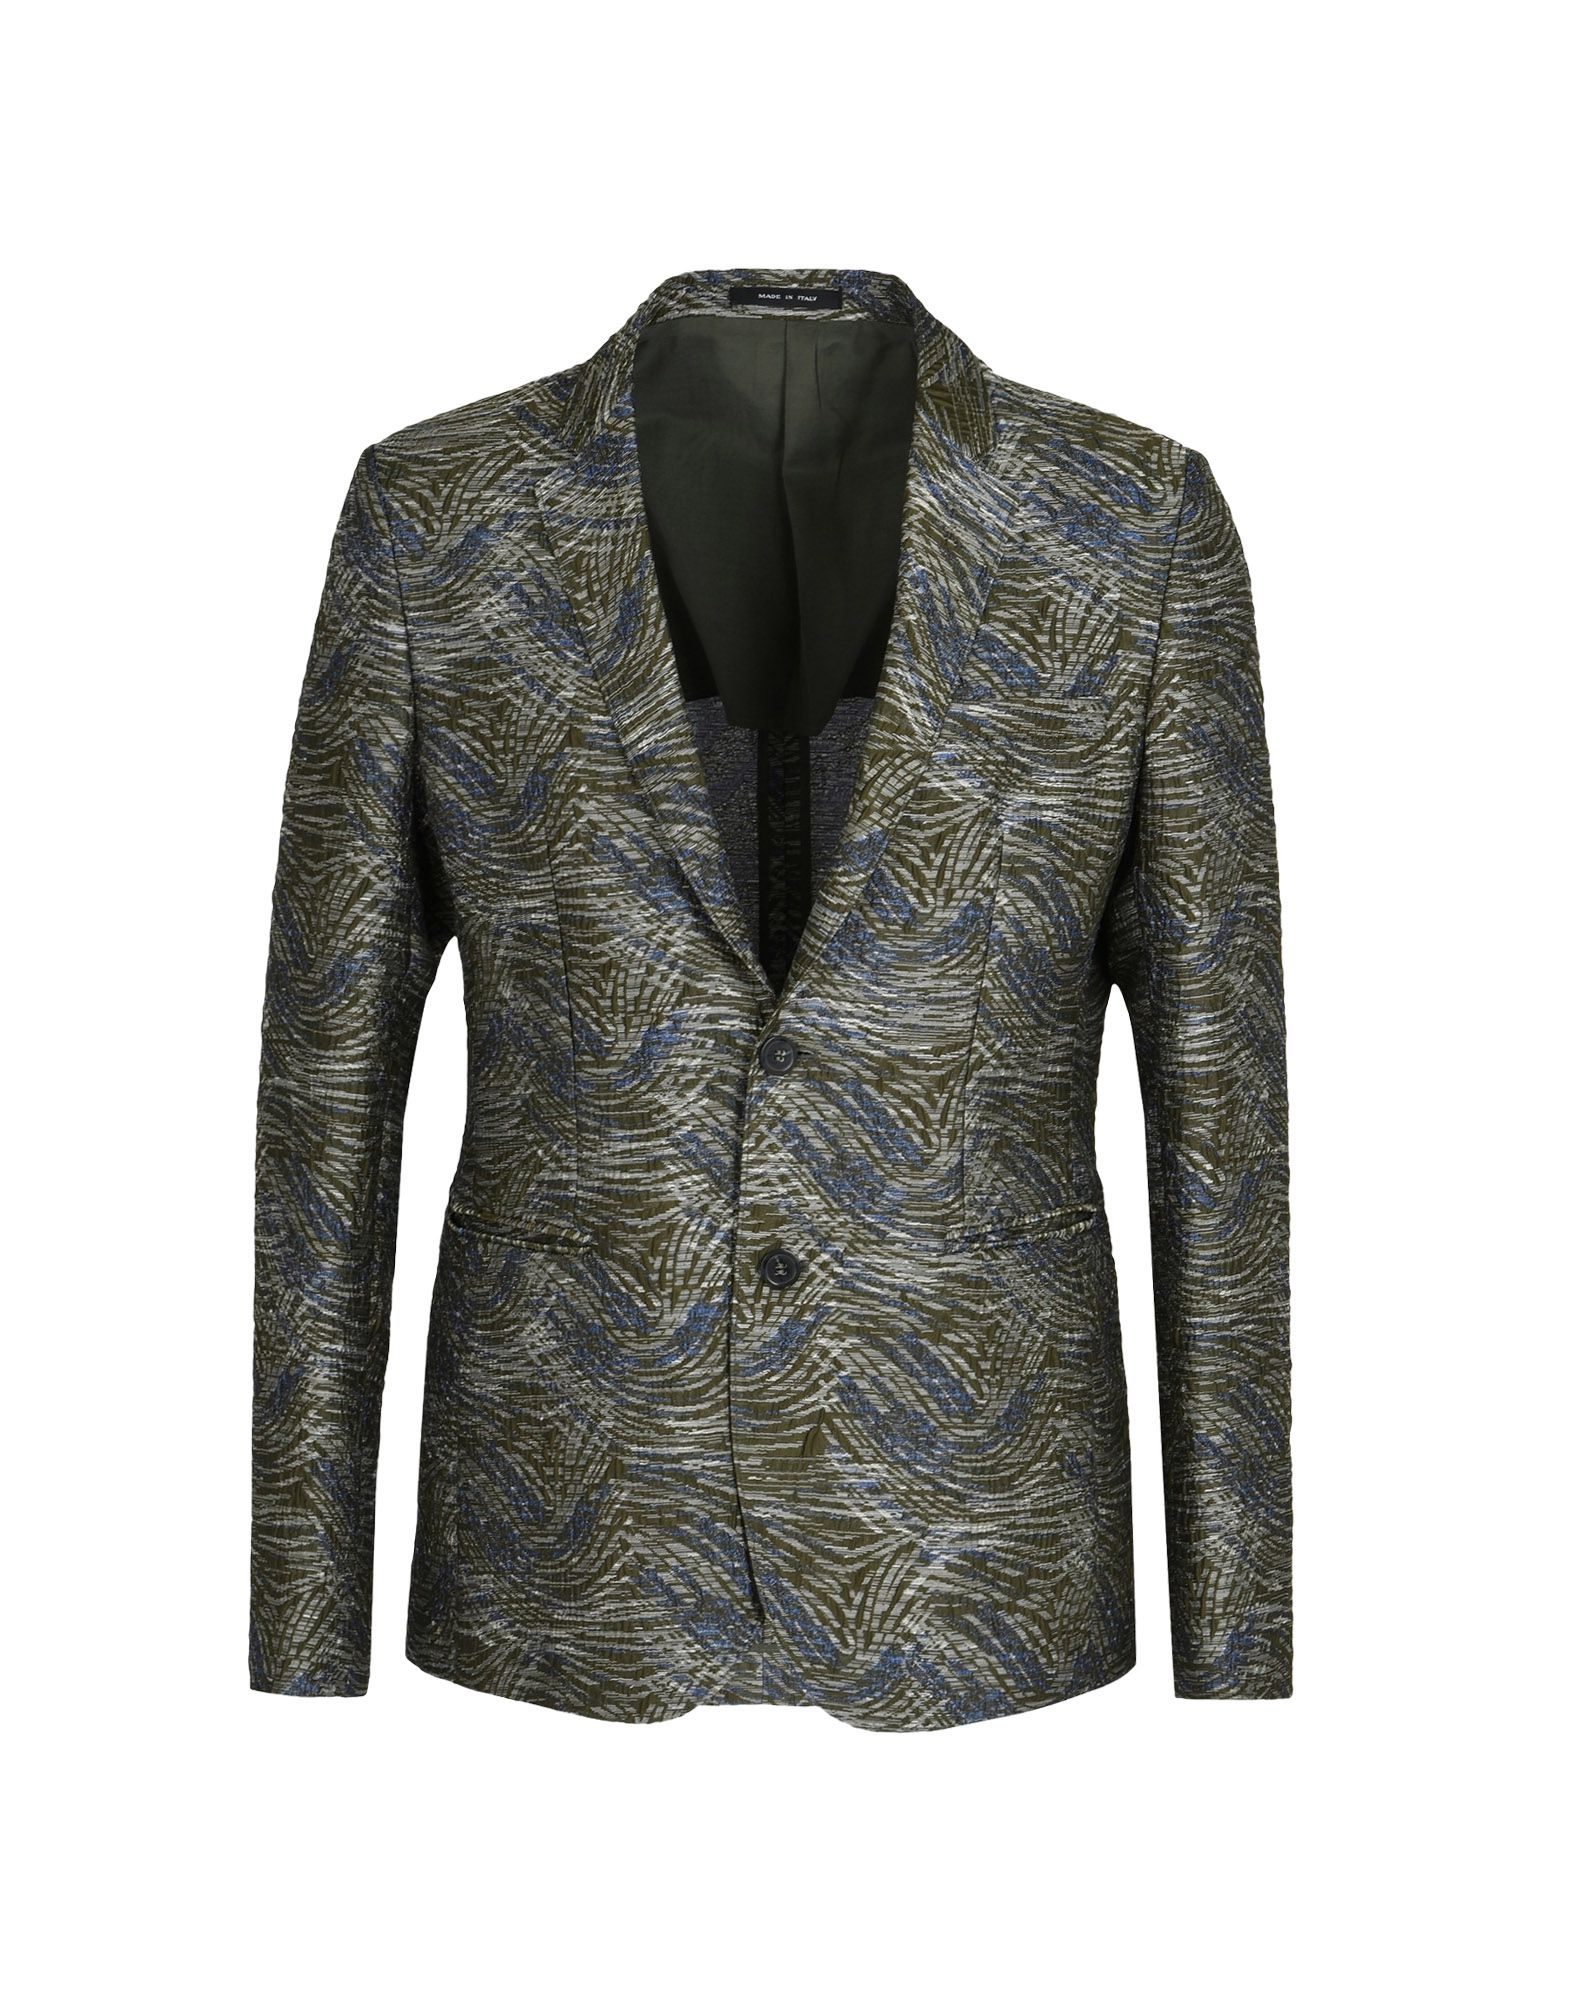 EMPORIO ARMANI Suit jackets - Item 49363127